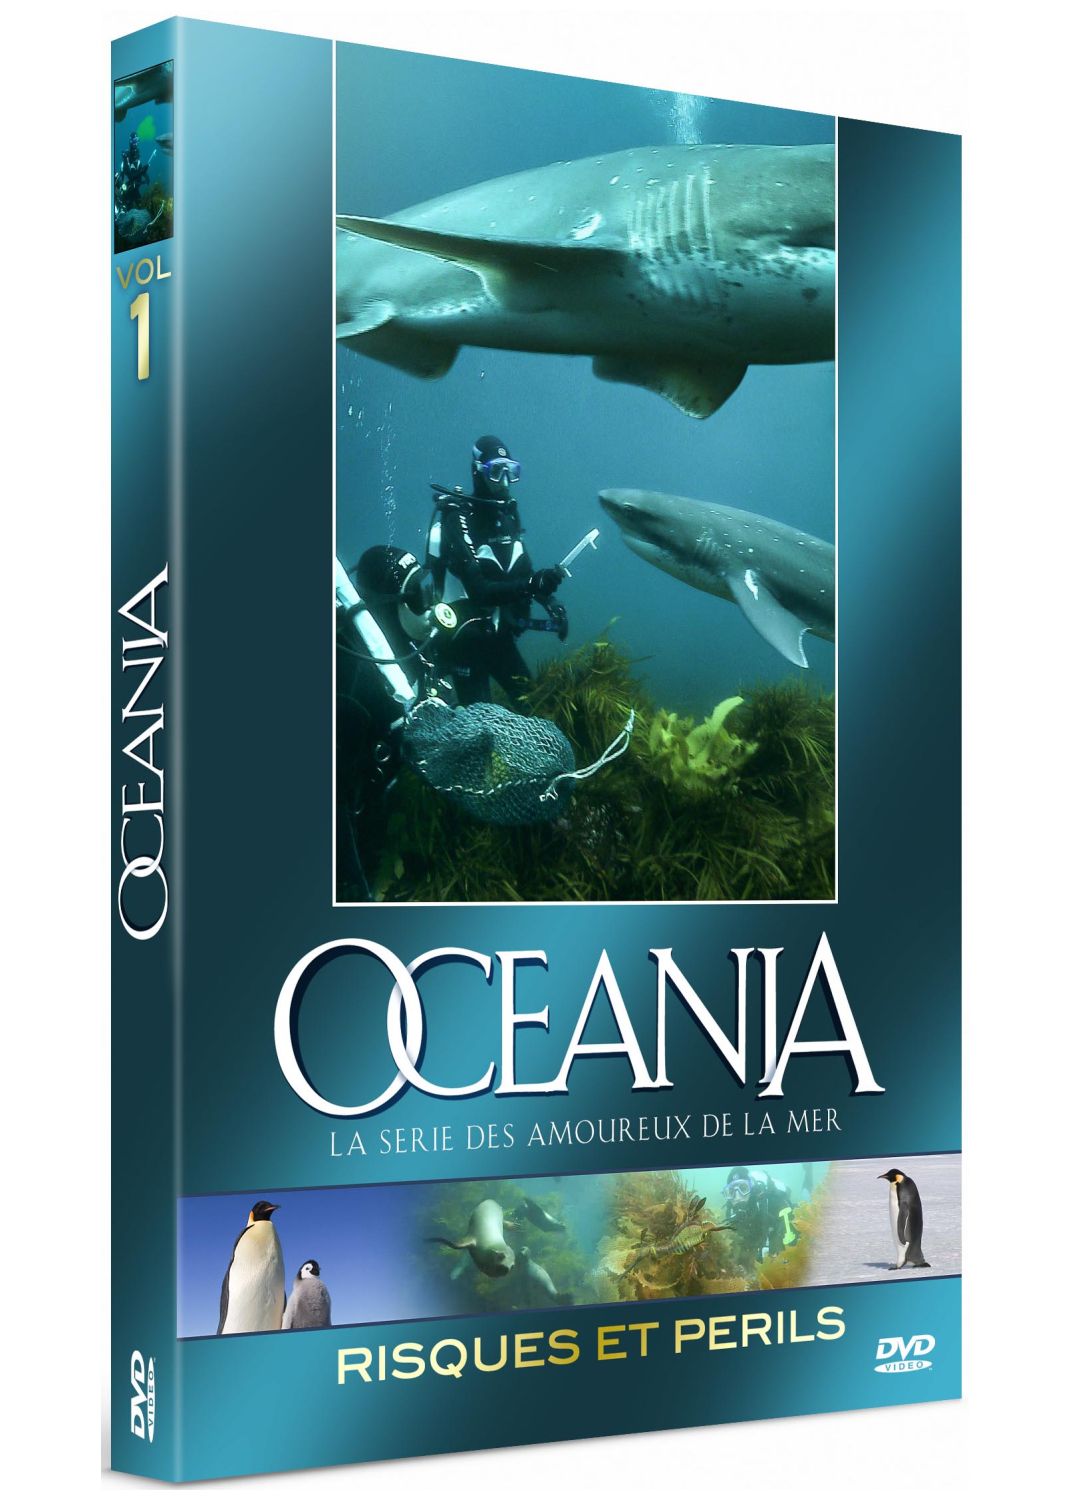 Oceania, Vol 1 : Risques Et Périls [DVD]